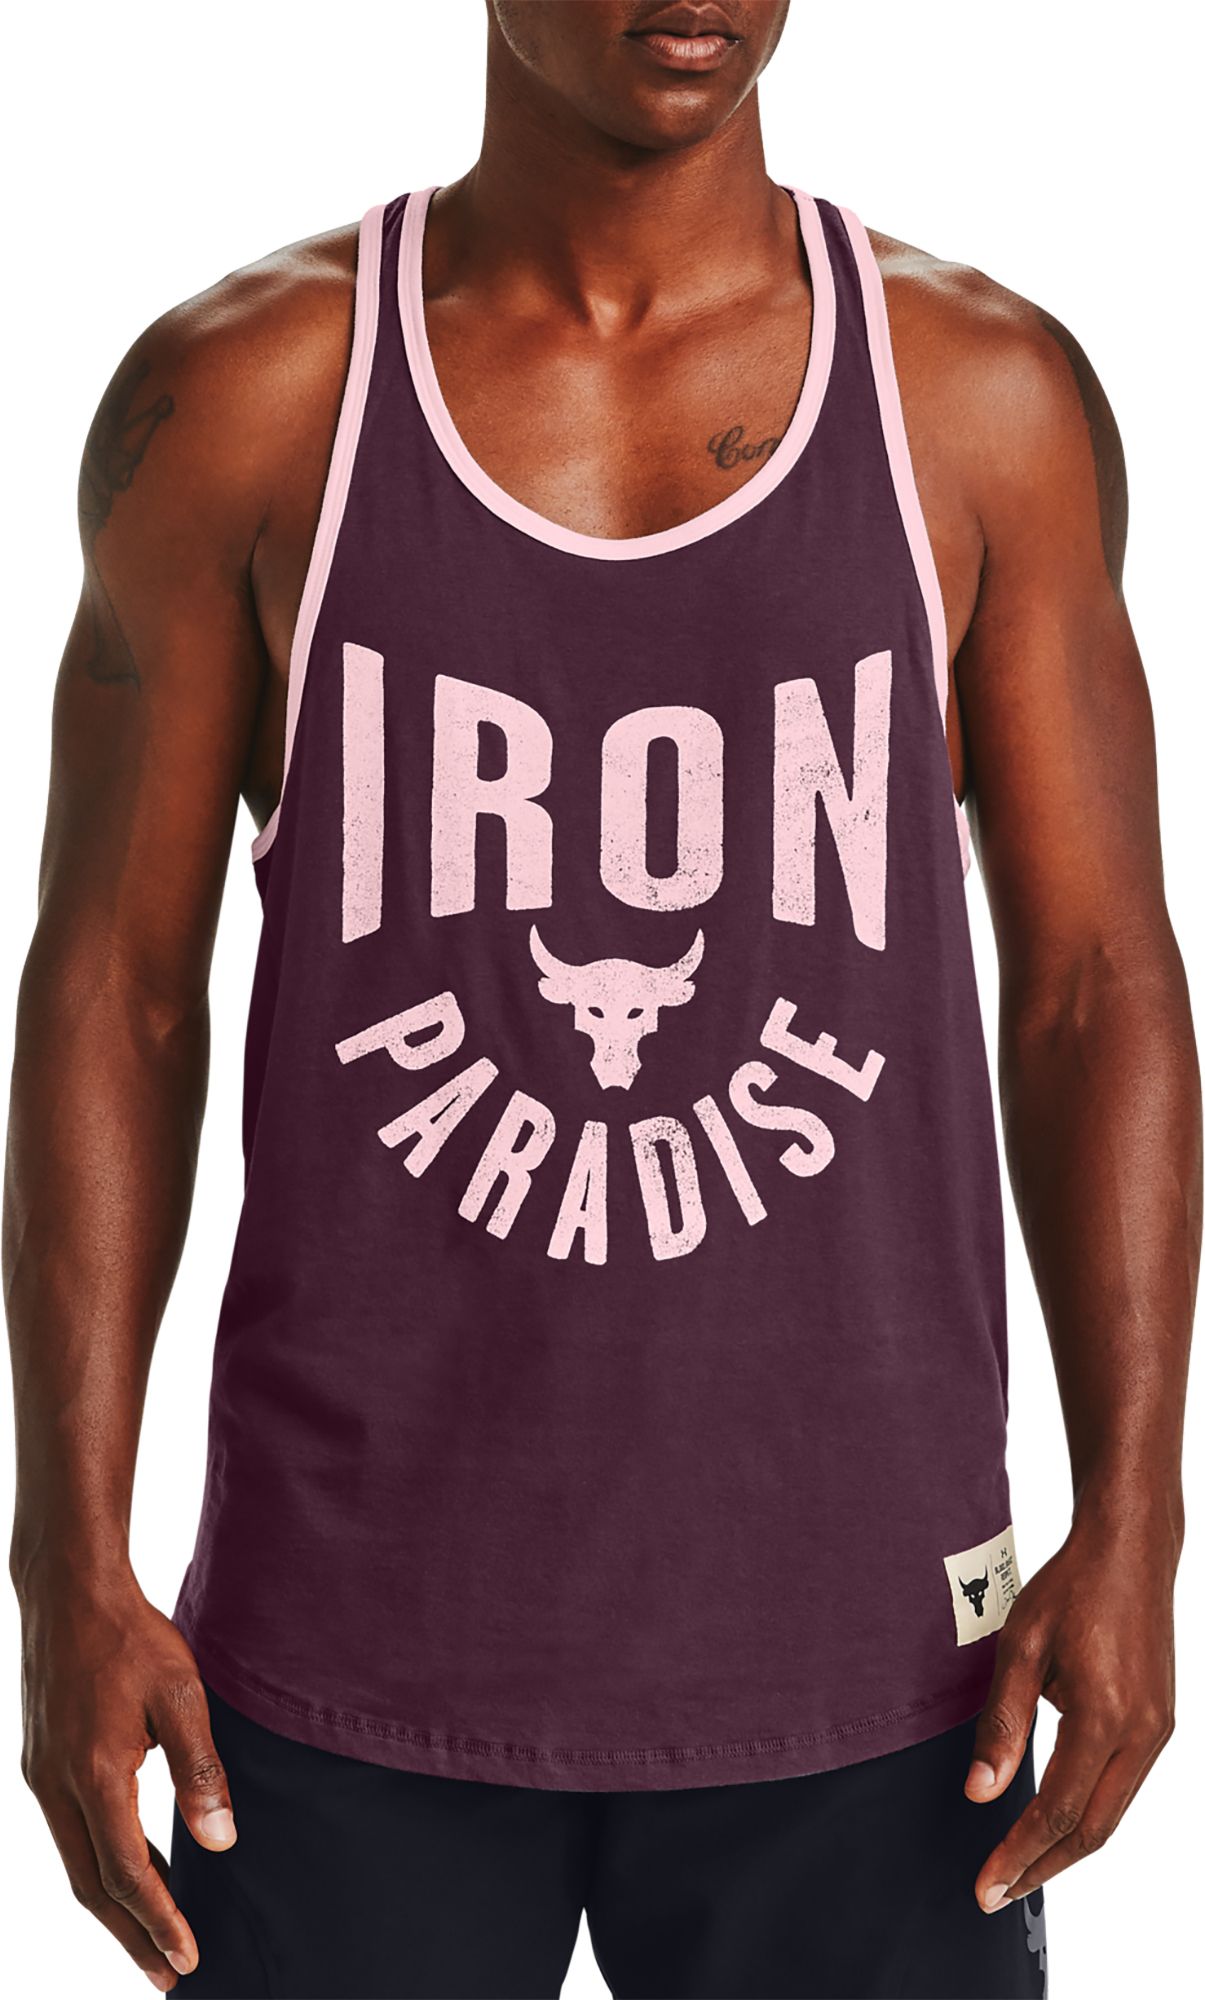 iron paradise apparel